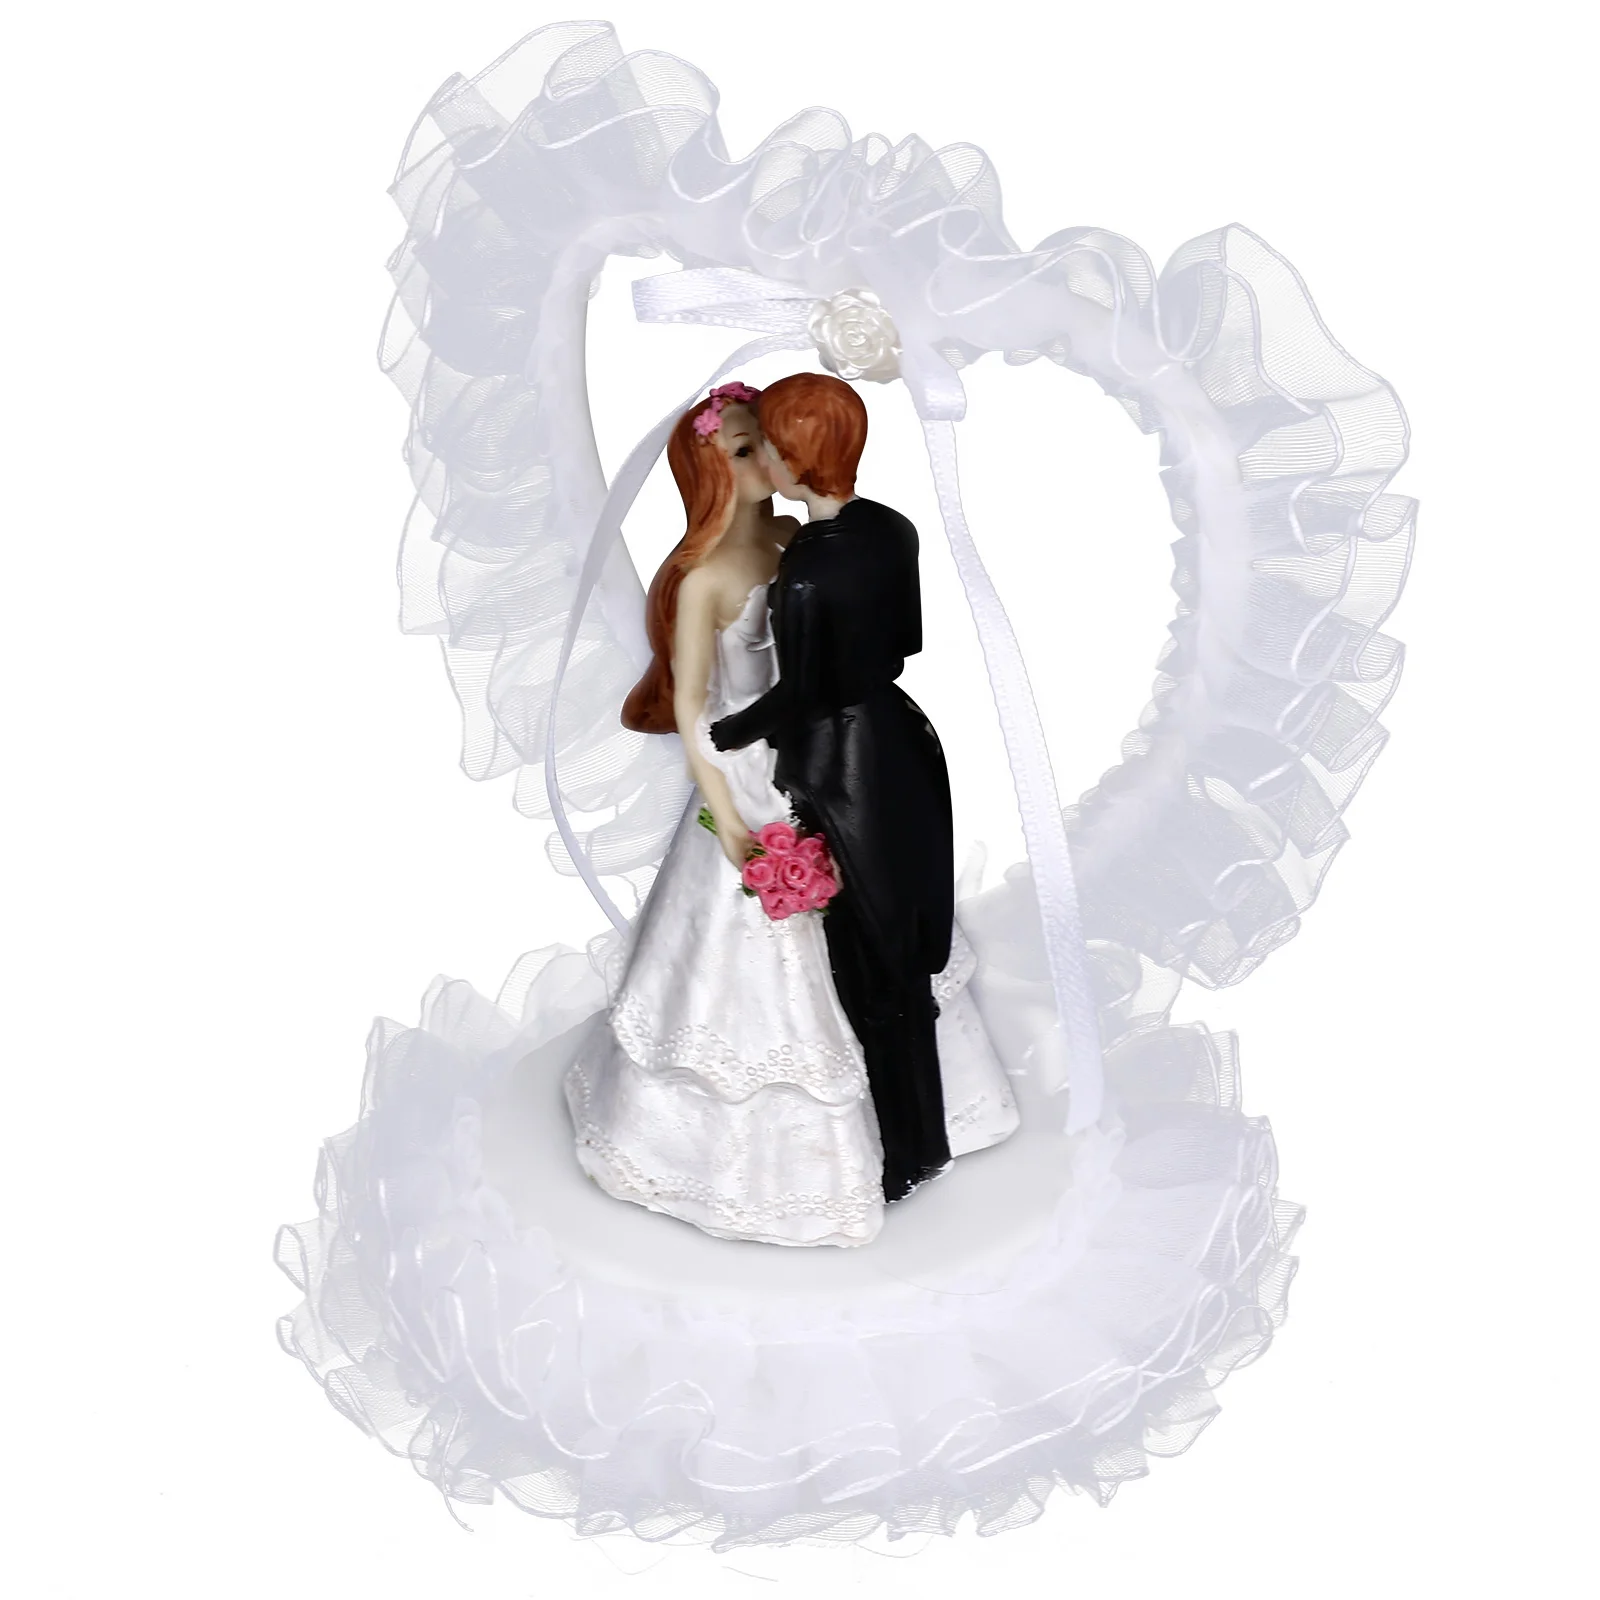 

Couple Cake Wedding Topper Bride Groom Figurines Figurine Figures Resin Picks Cupcake Statue Anniversary Decor Sculpture Loving